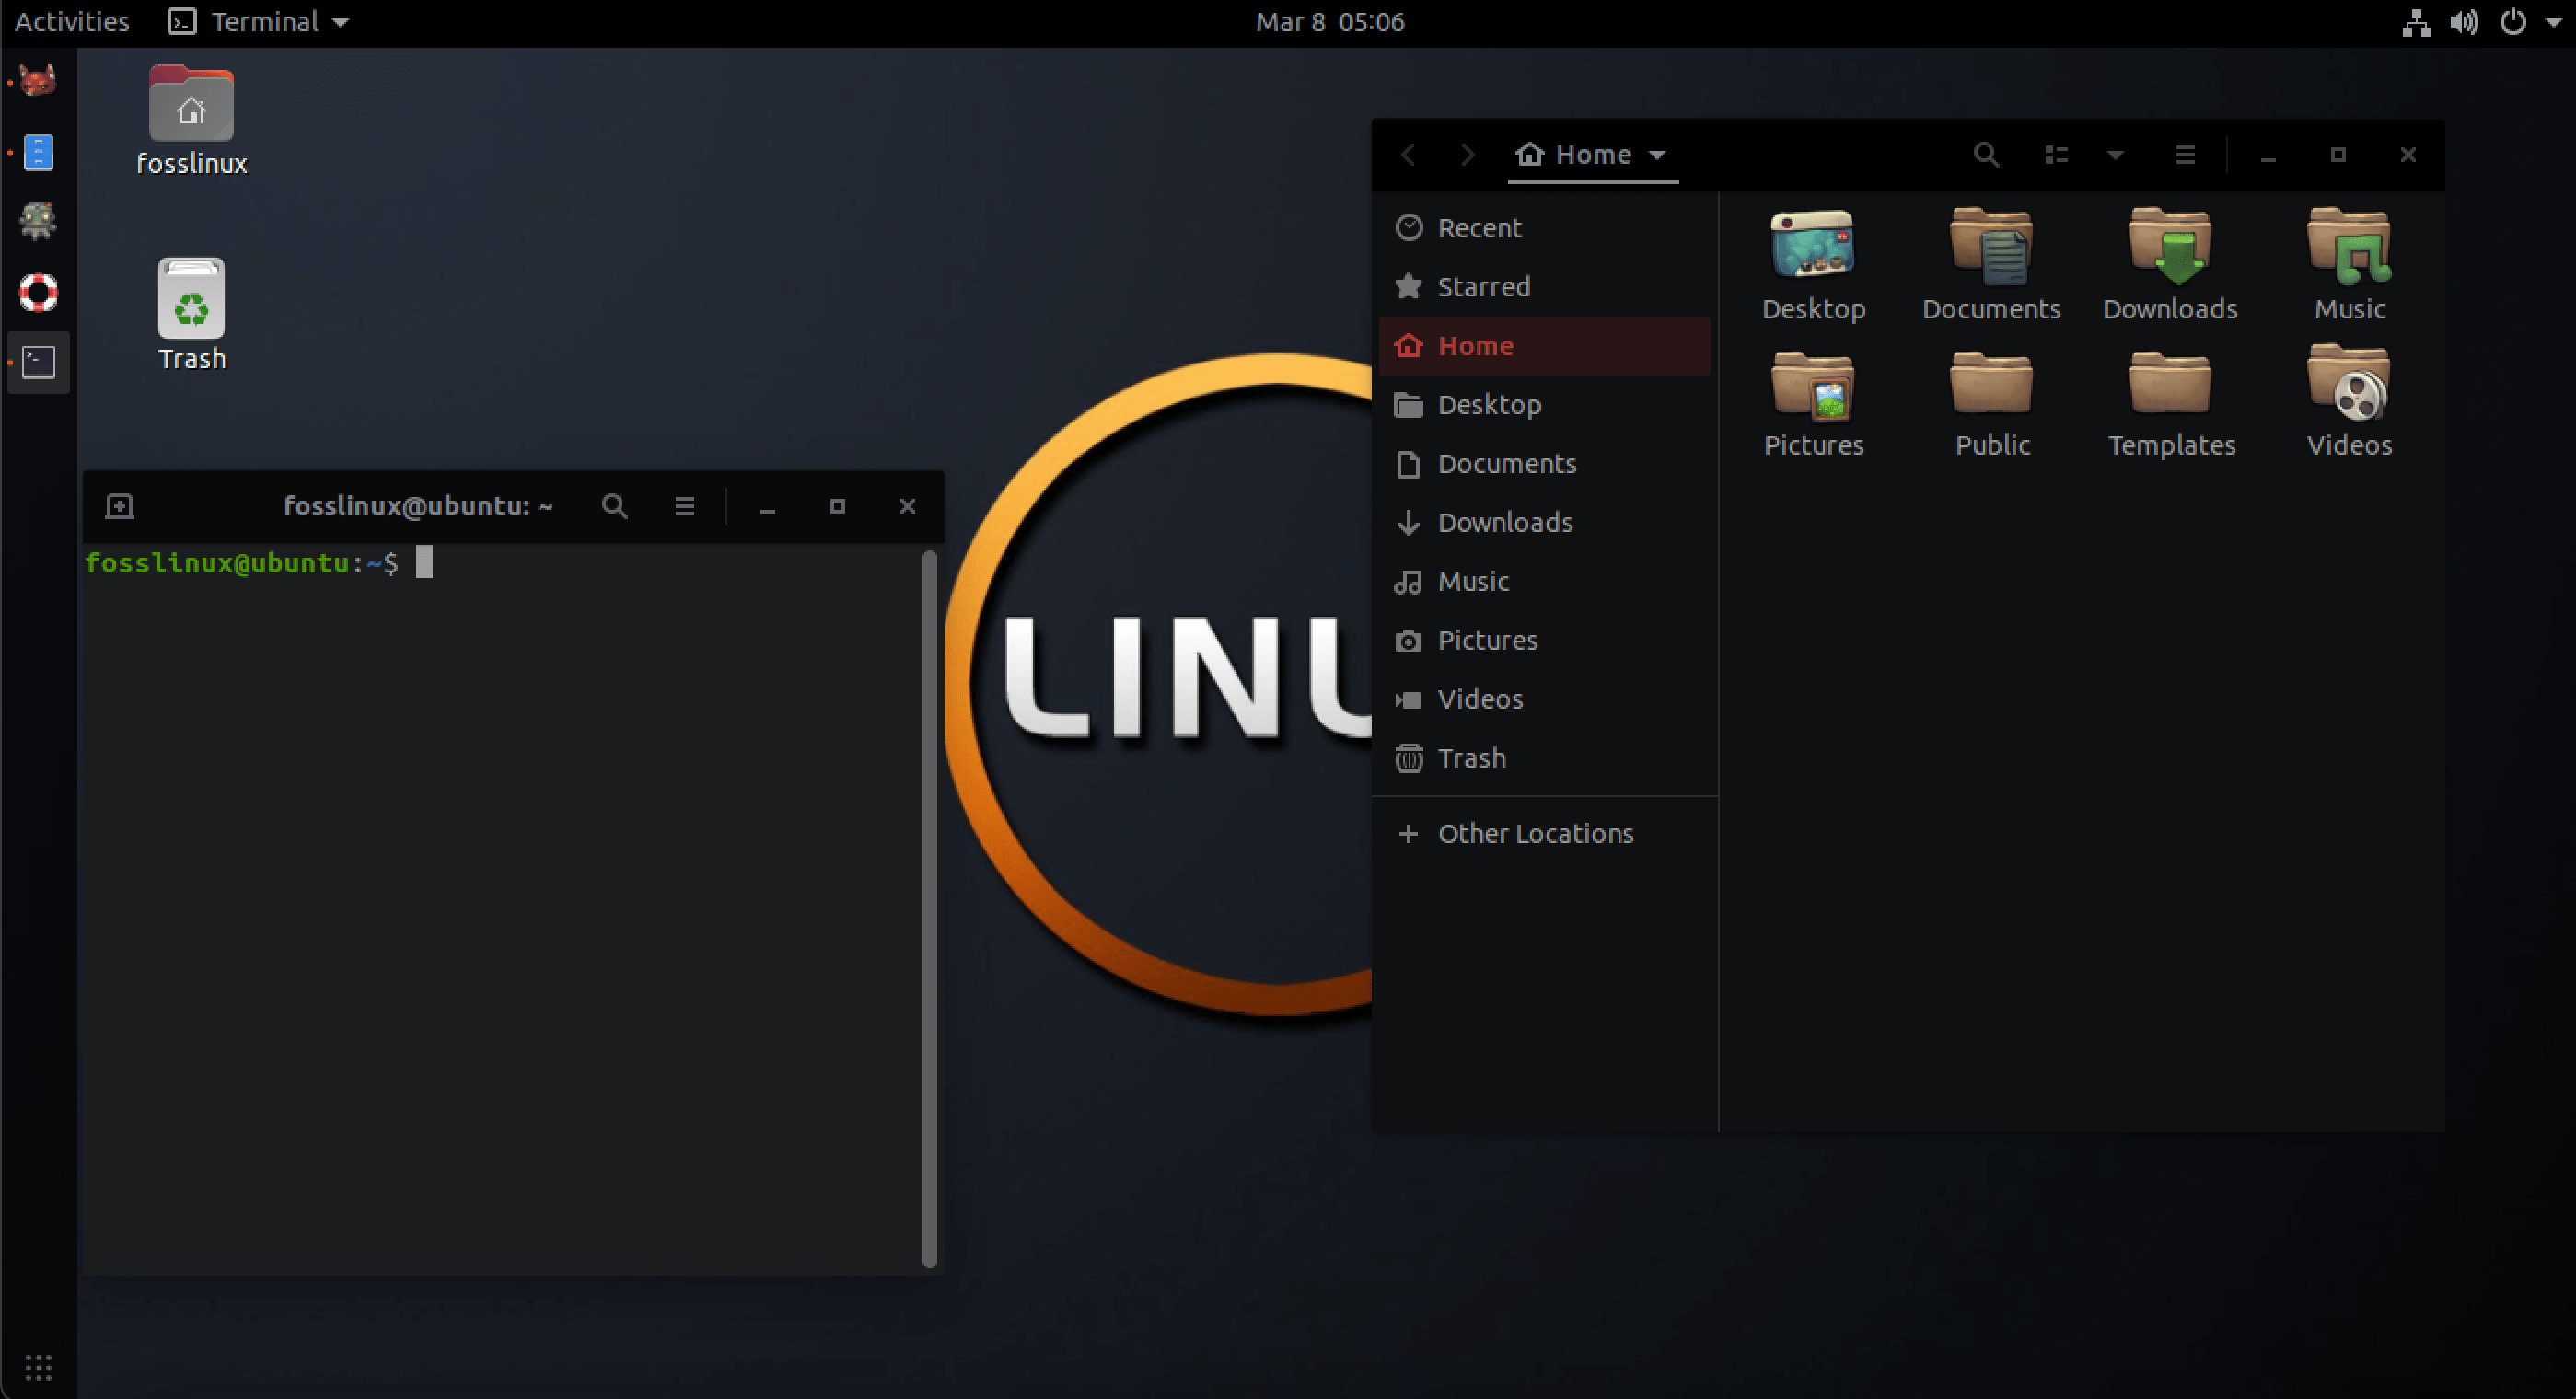 new ubuntu look